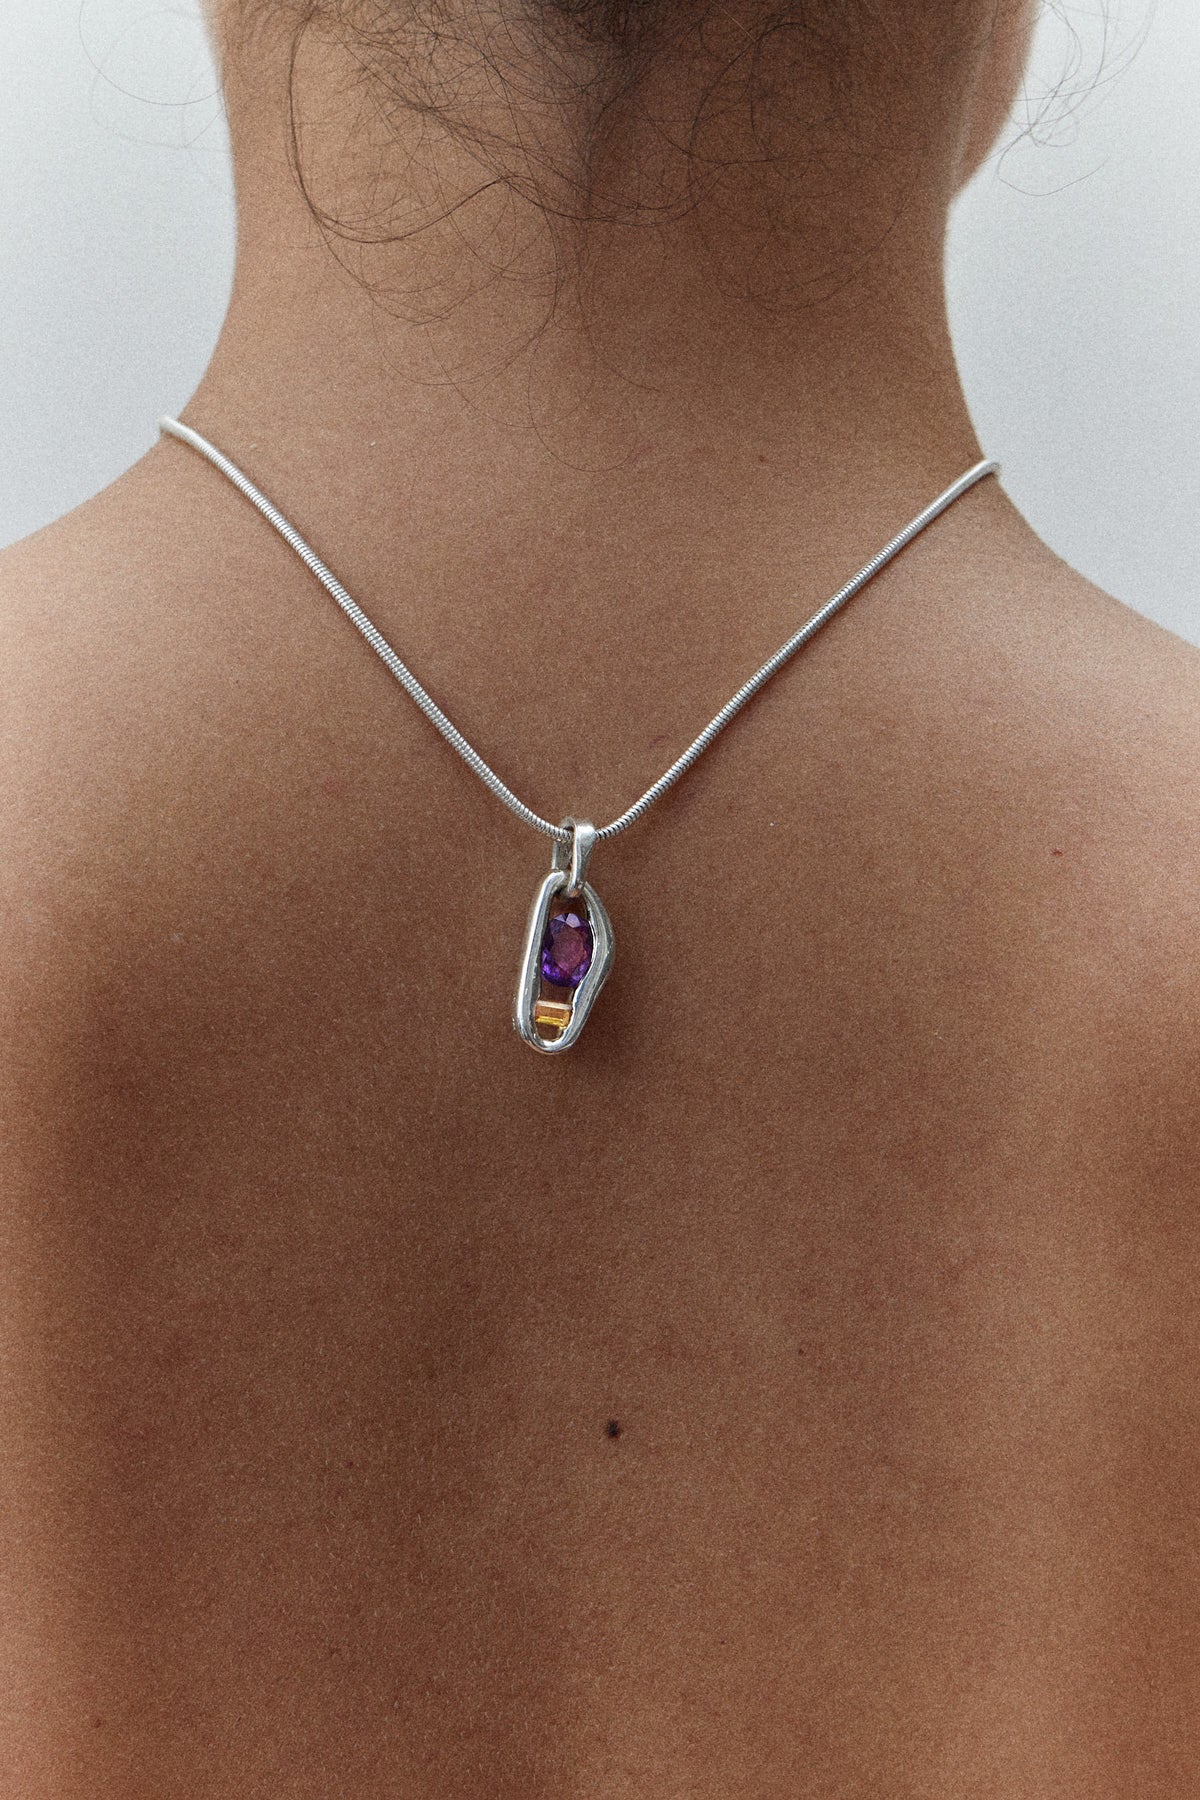 amatrina cocktail necklace